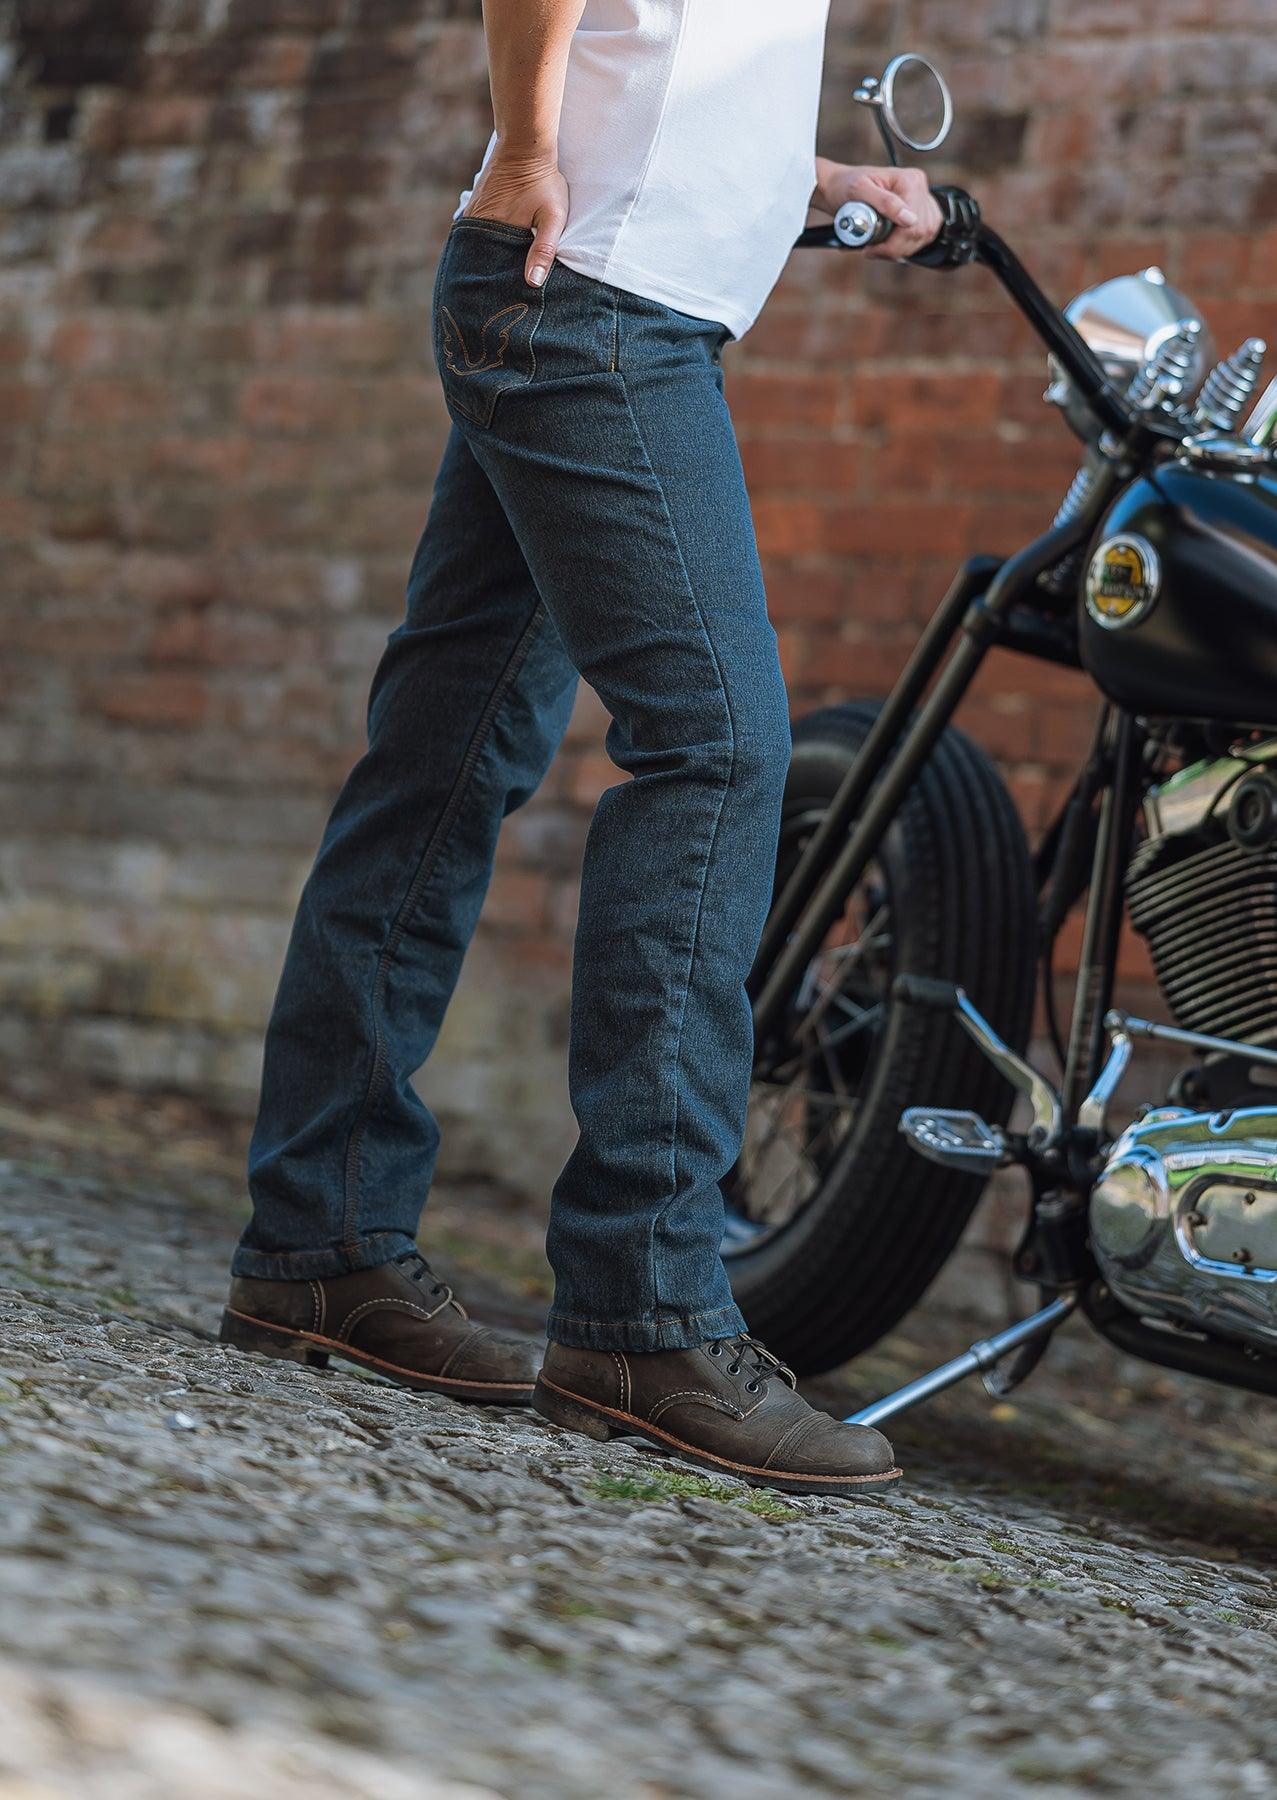 Single-layer motorcycle jeans vs Kevlar motorcycle jeans 